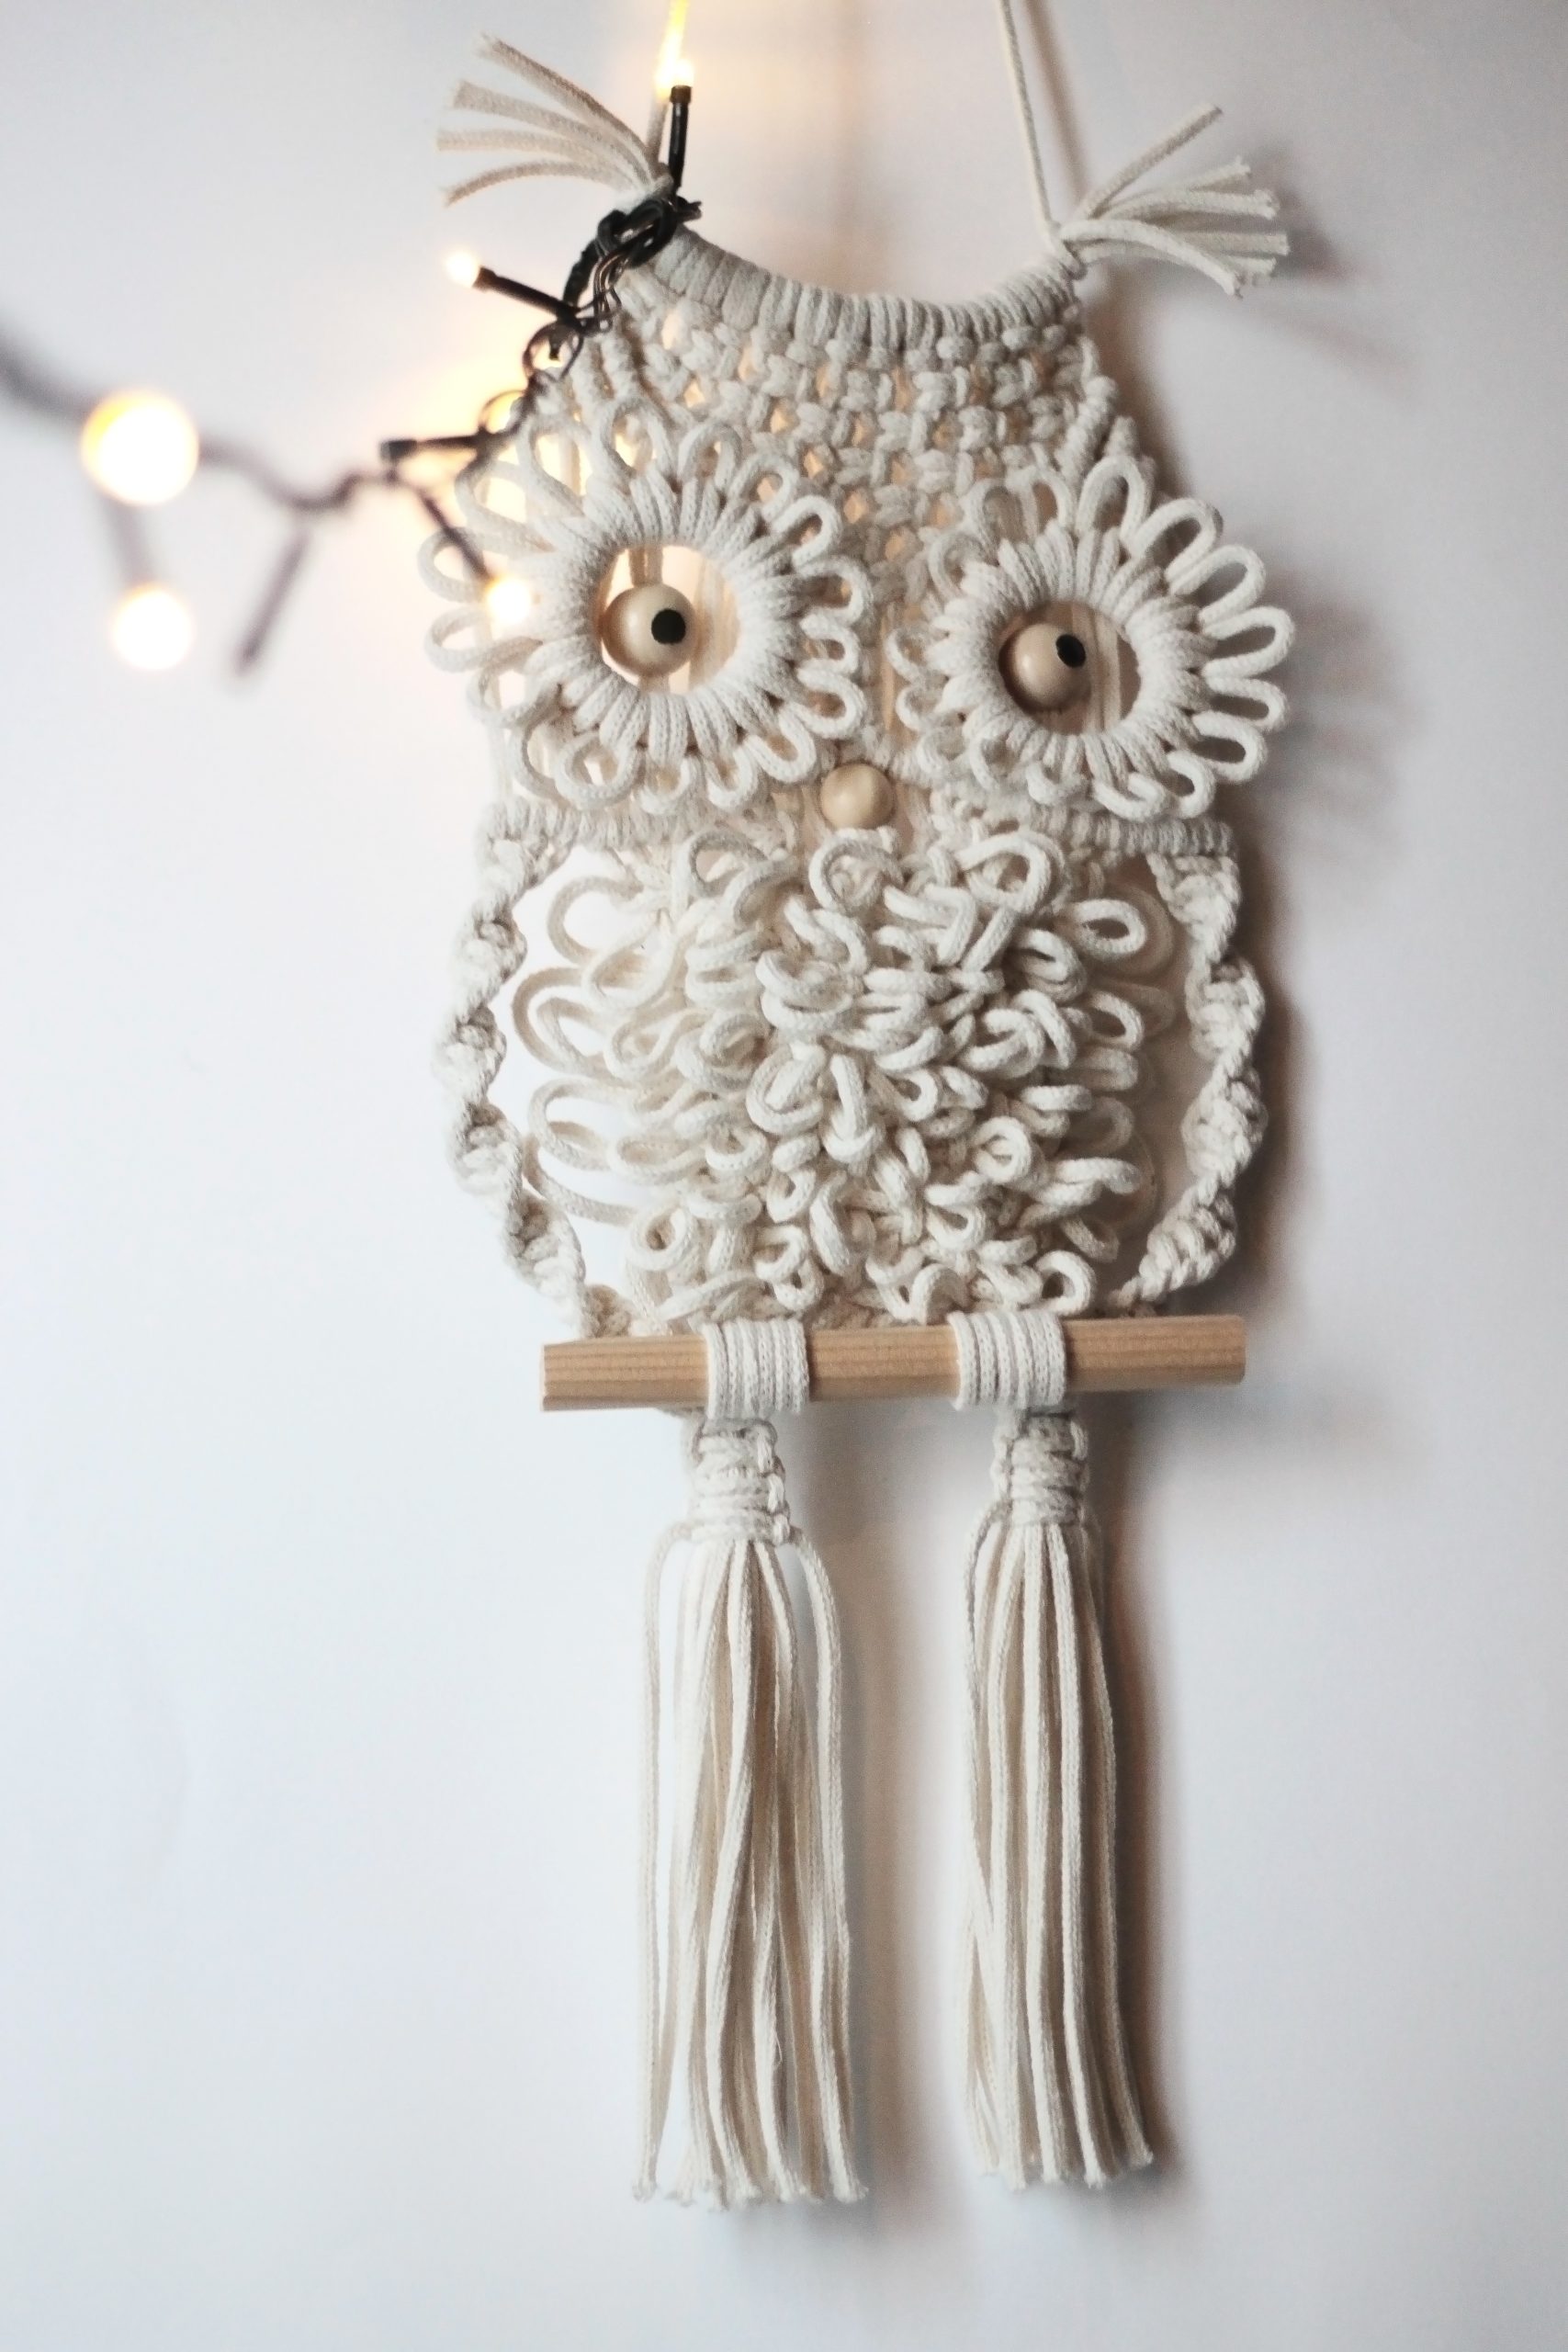 DIY Handmade Macrame Owl keychain